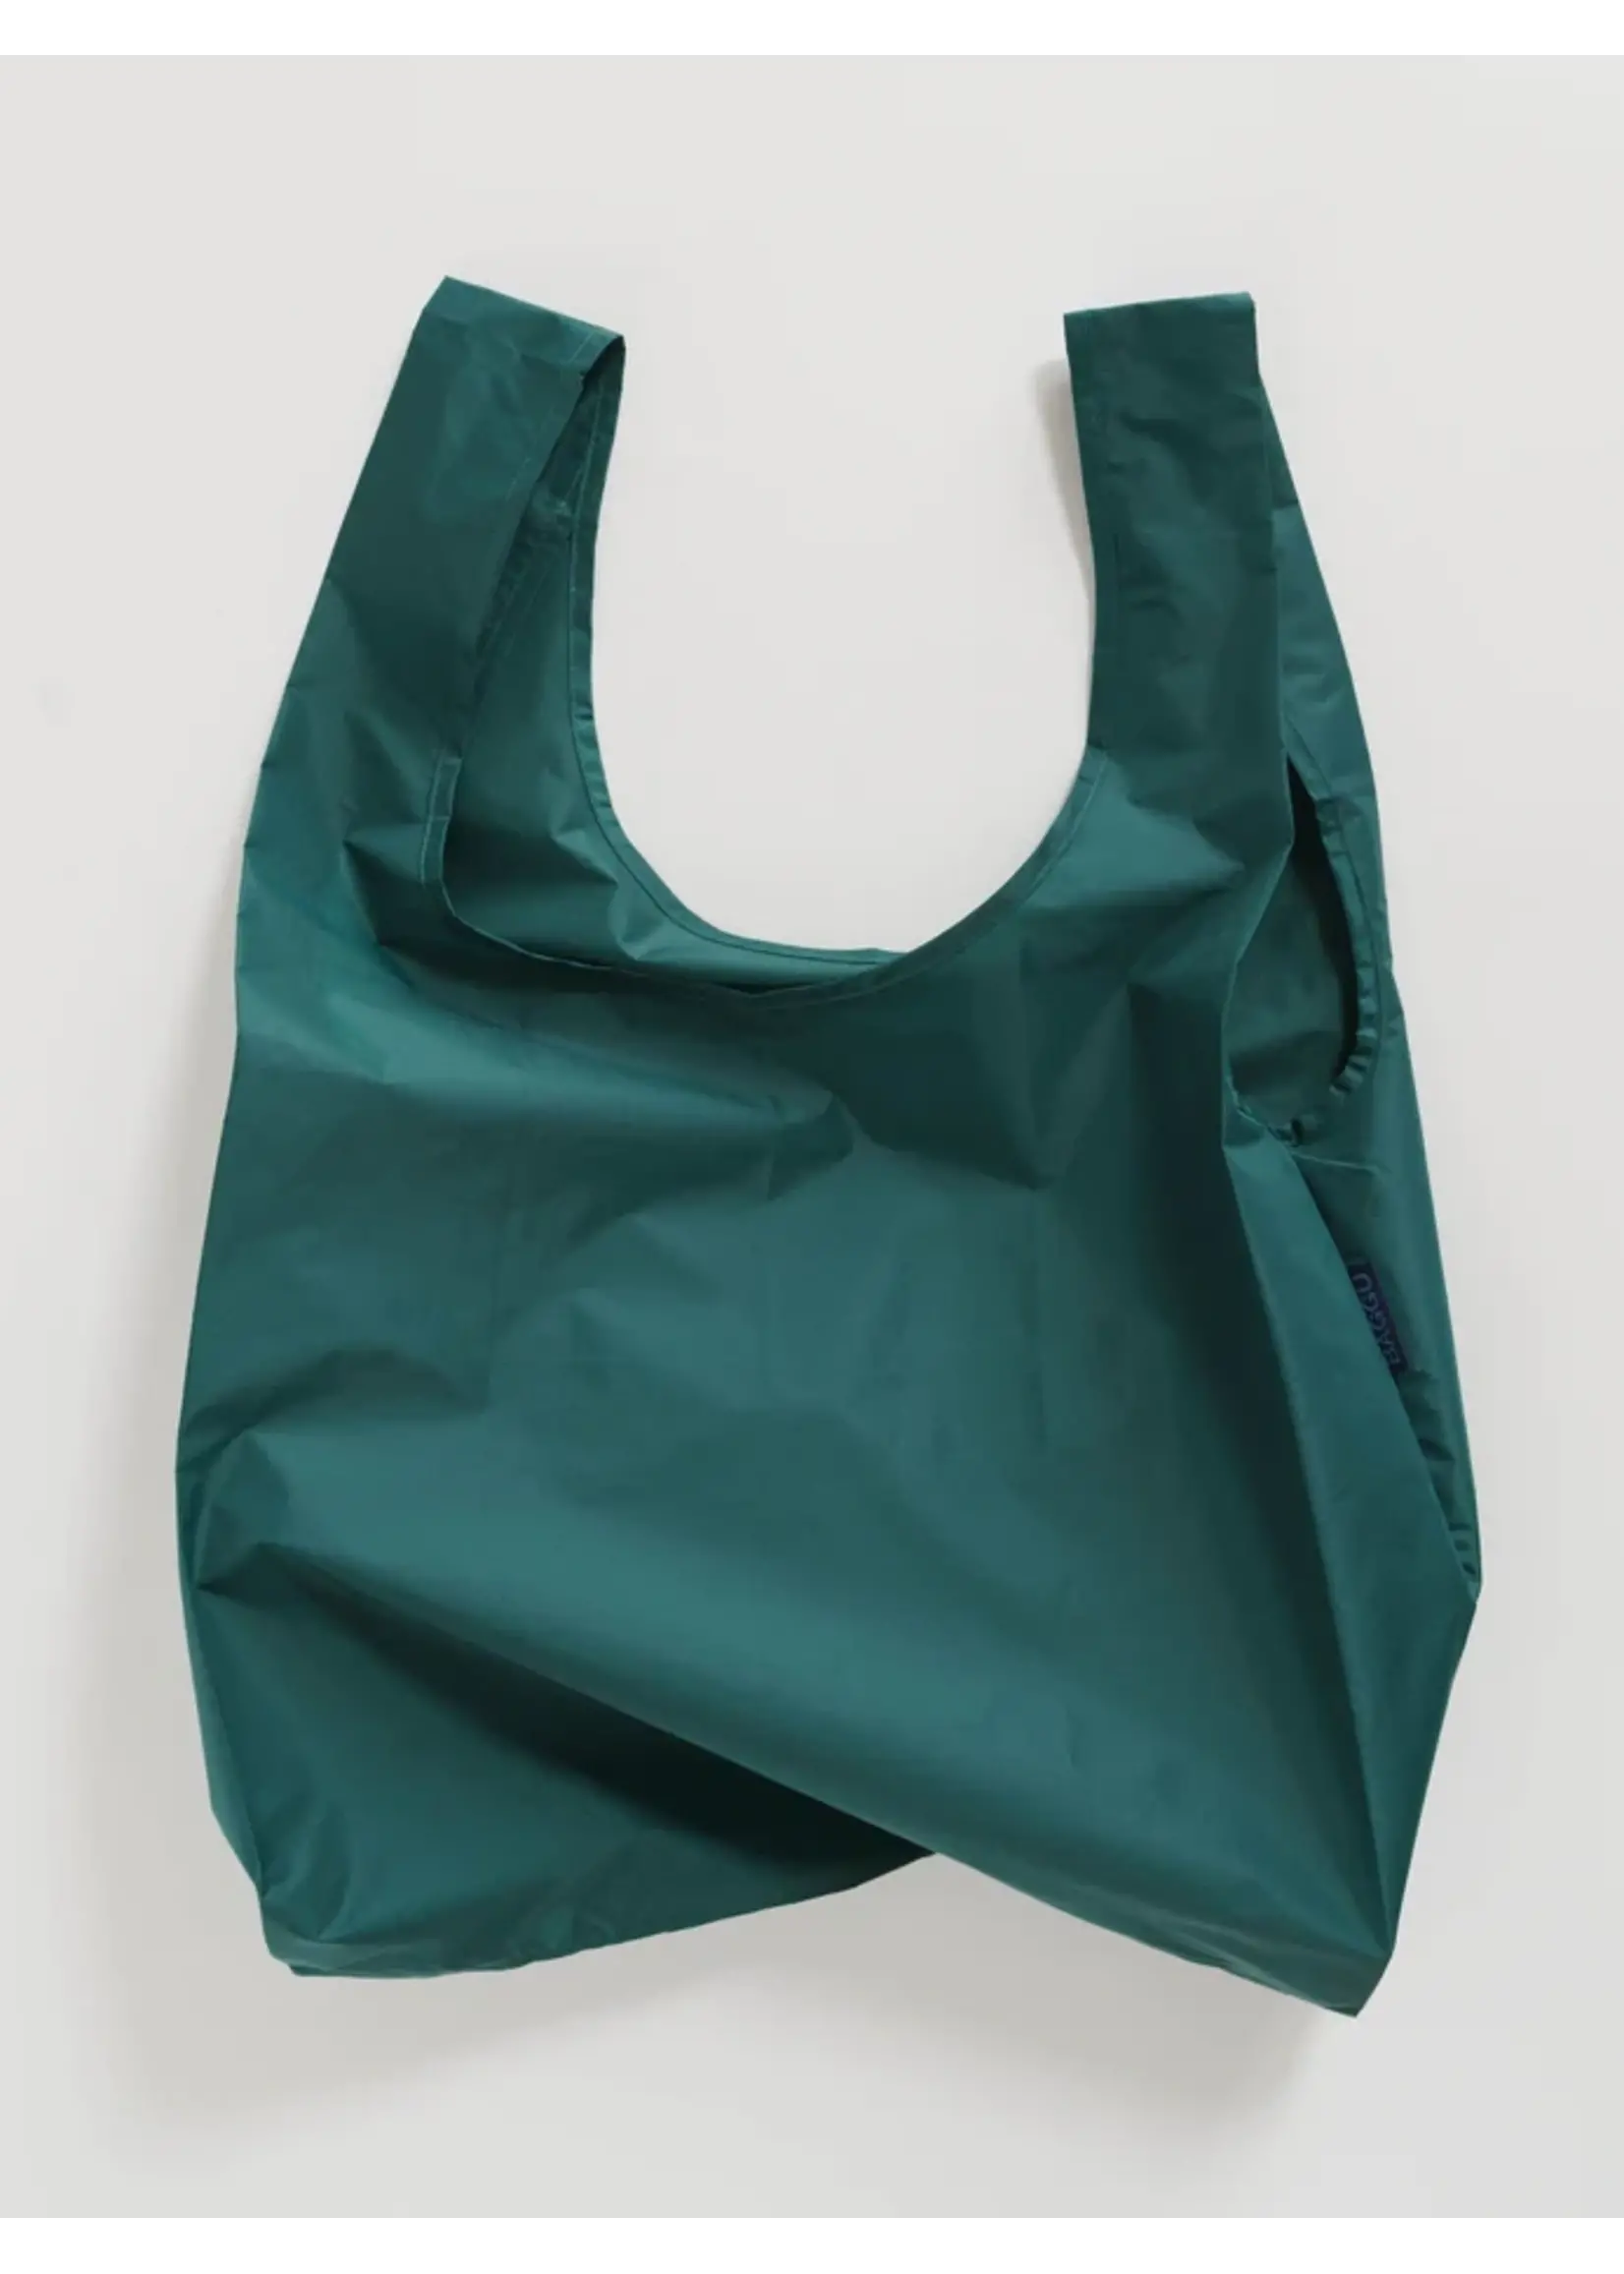 Baggu "Standard" reusable bags by Baggu